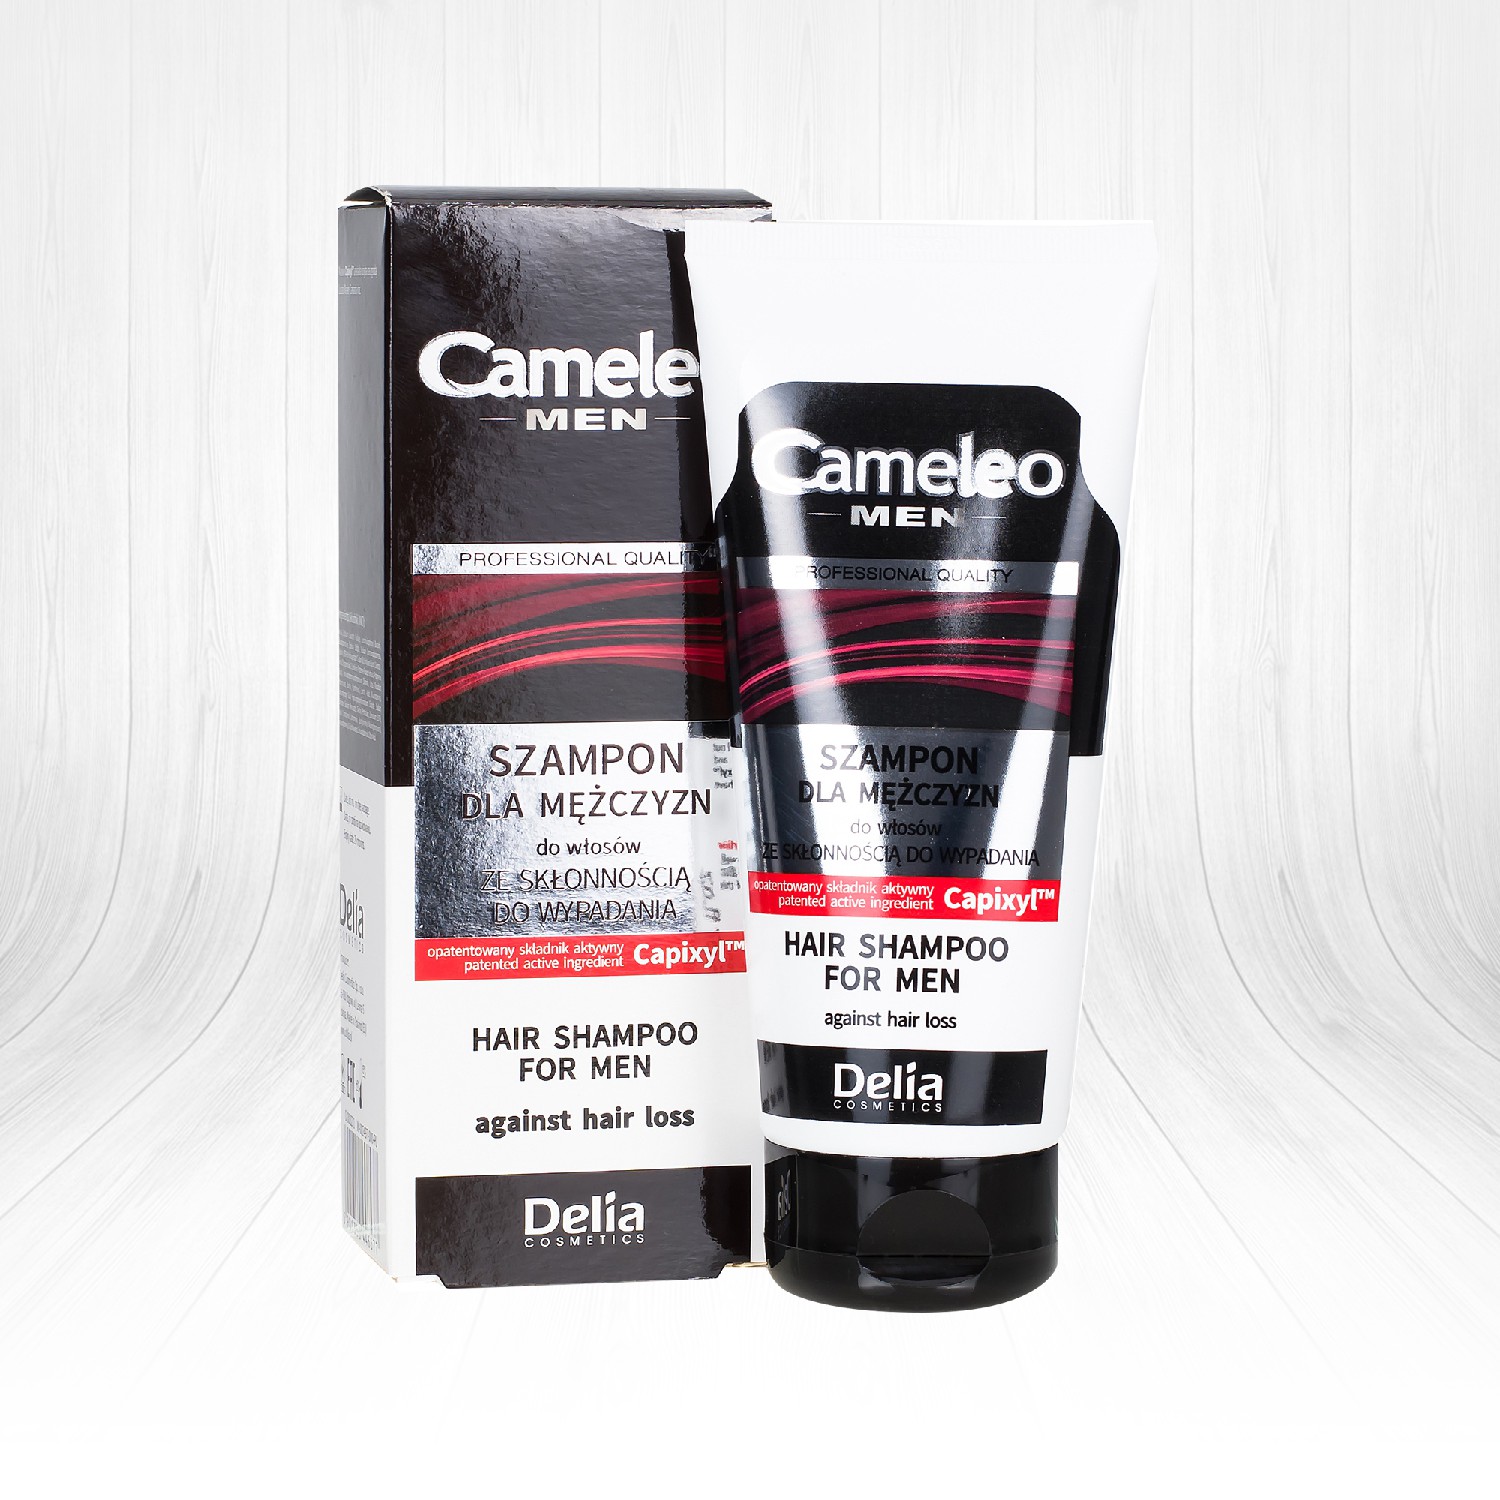 Delia Cameleo Formen Hair Loss Dökülme Önleyici Şampuan